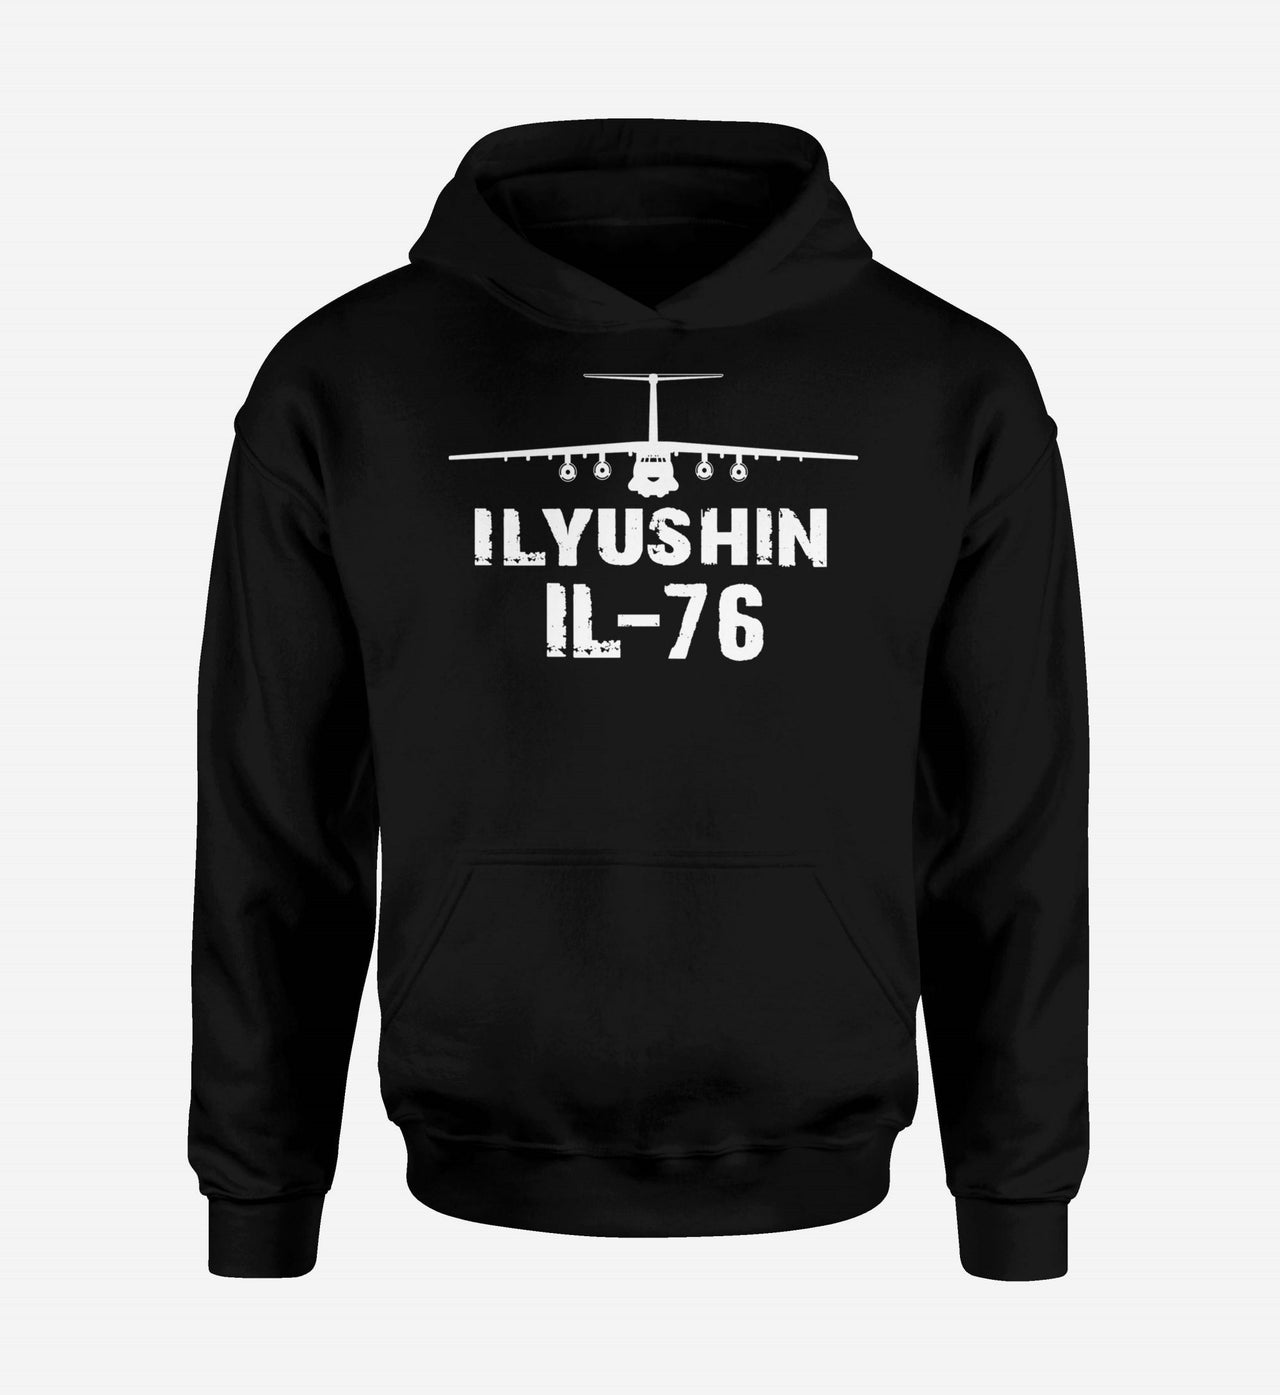 ILyushin IL-76 & Plane Designed Hoodies